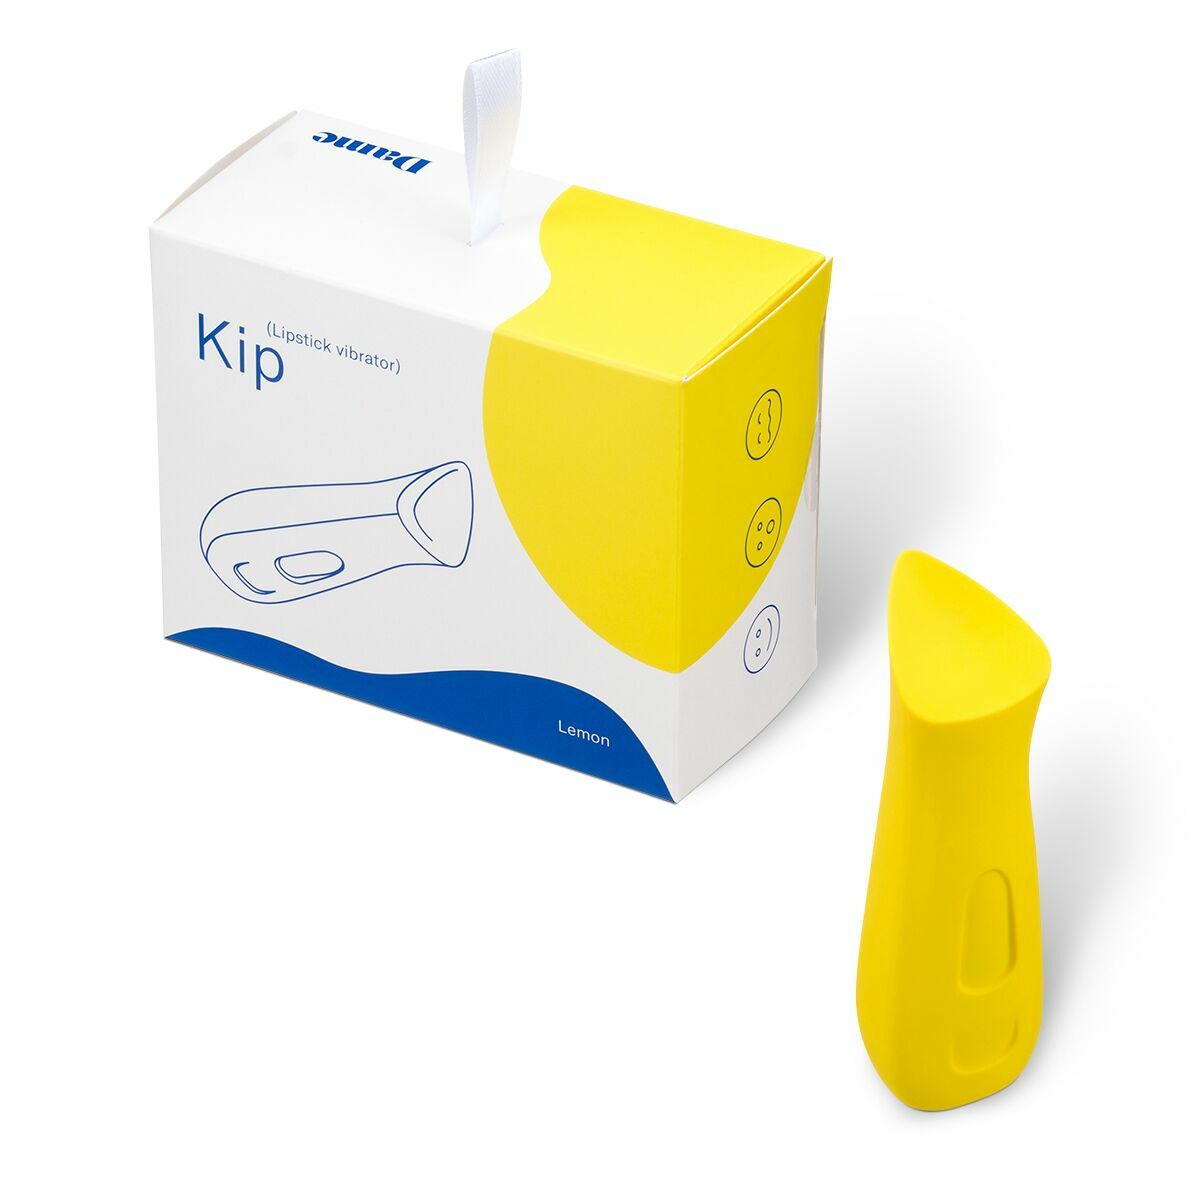 Dame Products Kip Vibrator